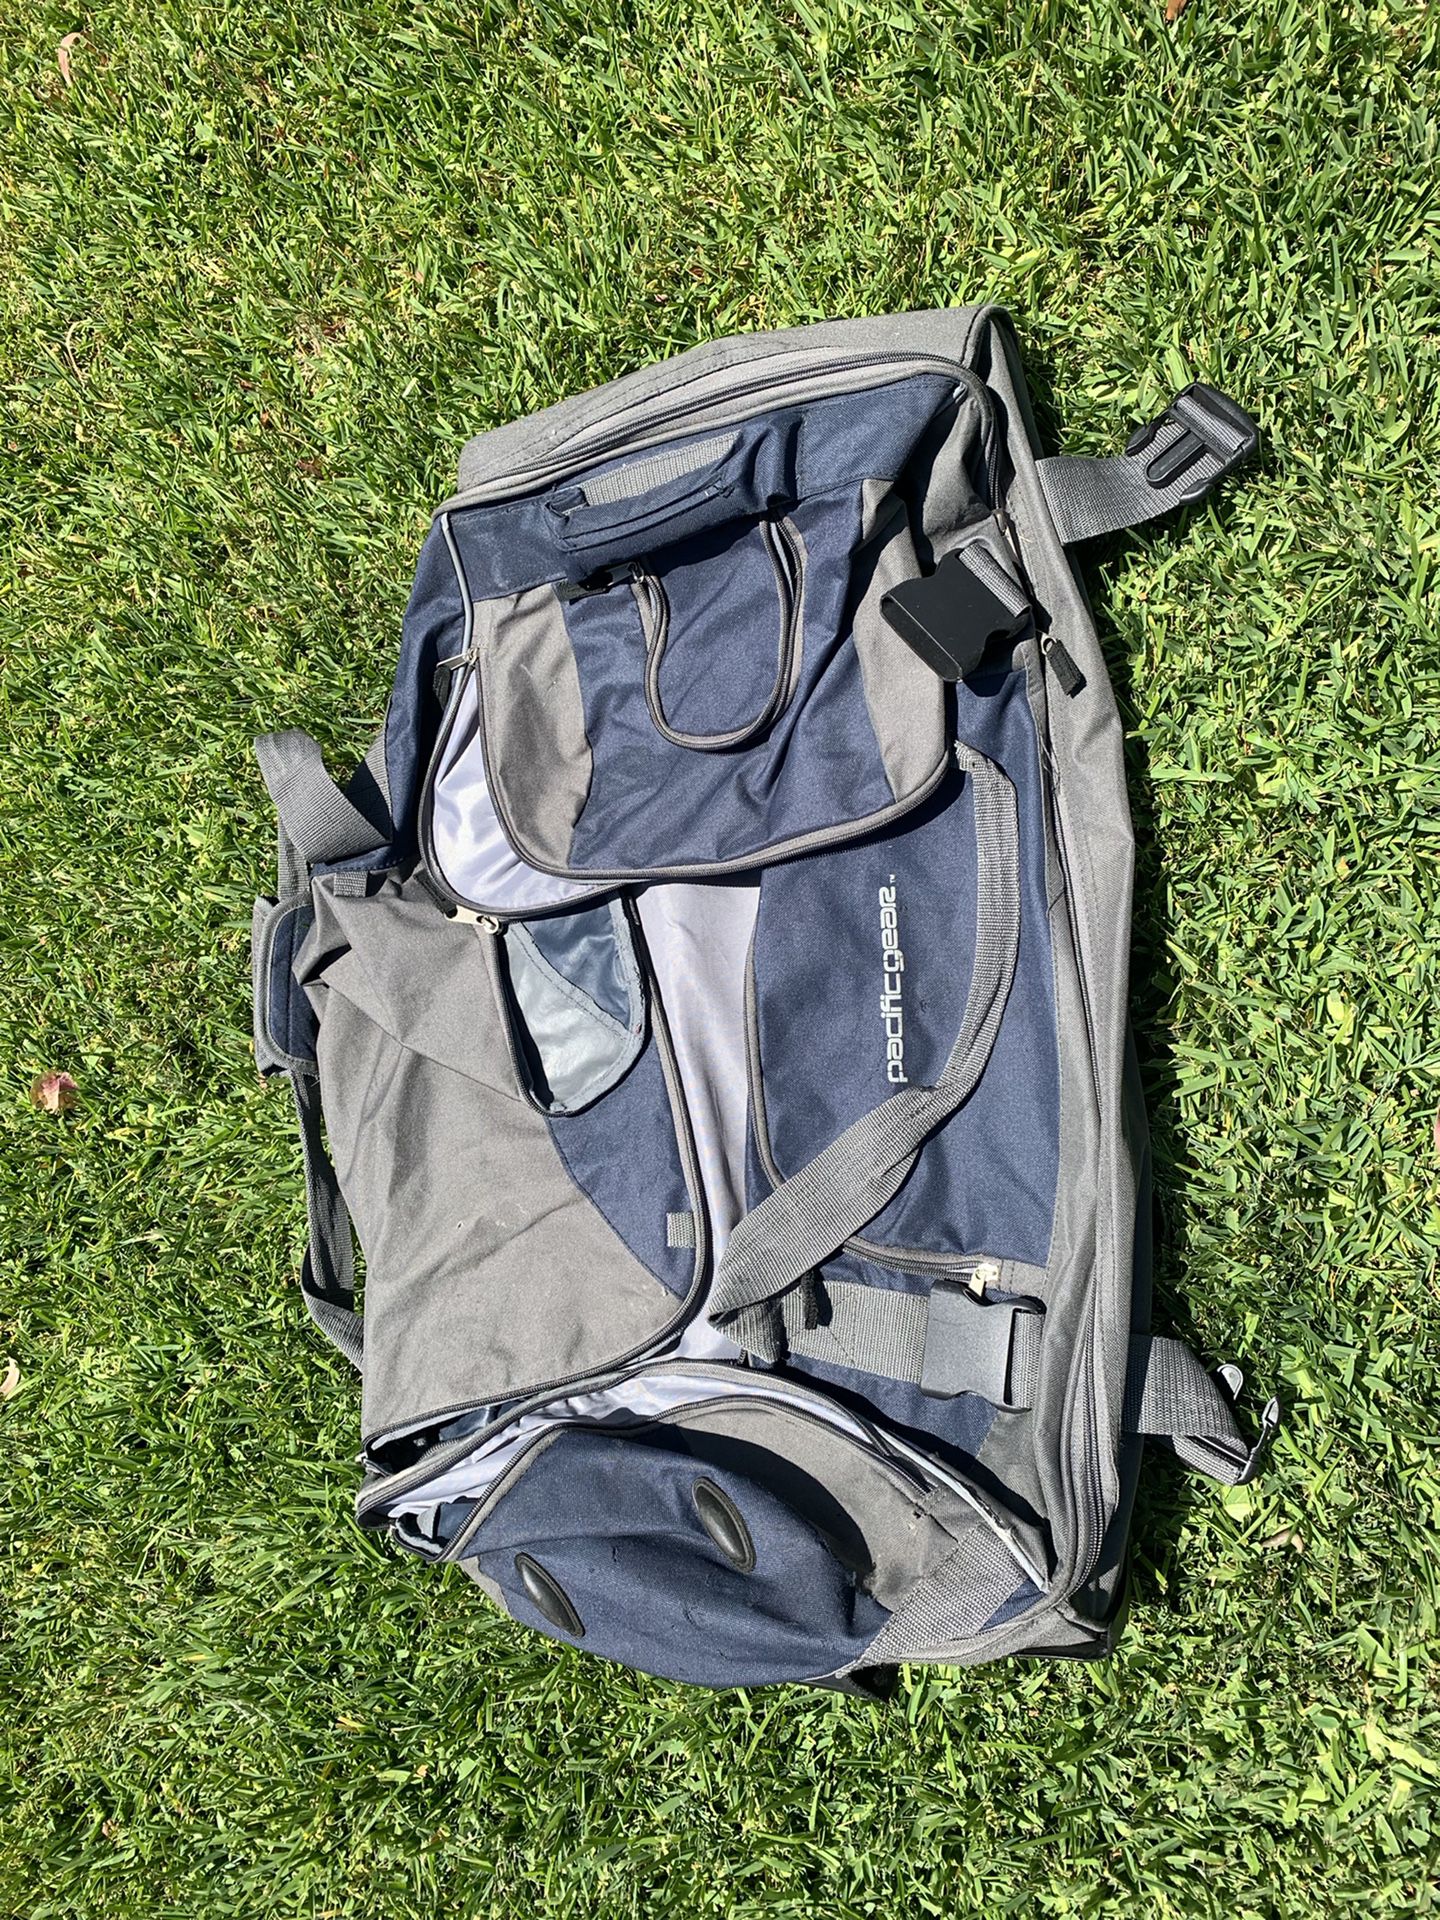 Pacific Gear Duffle Bag/ Gym bag